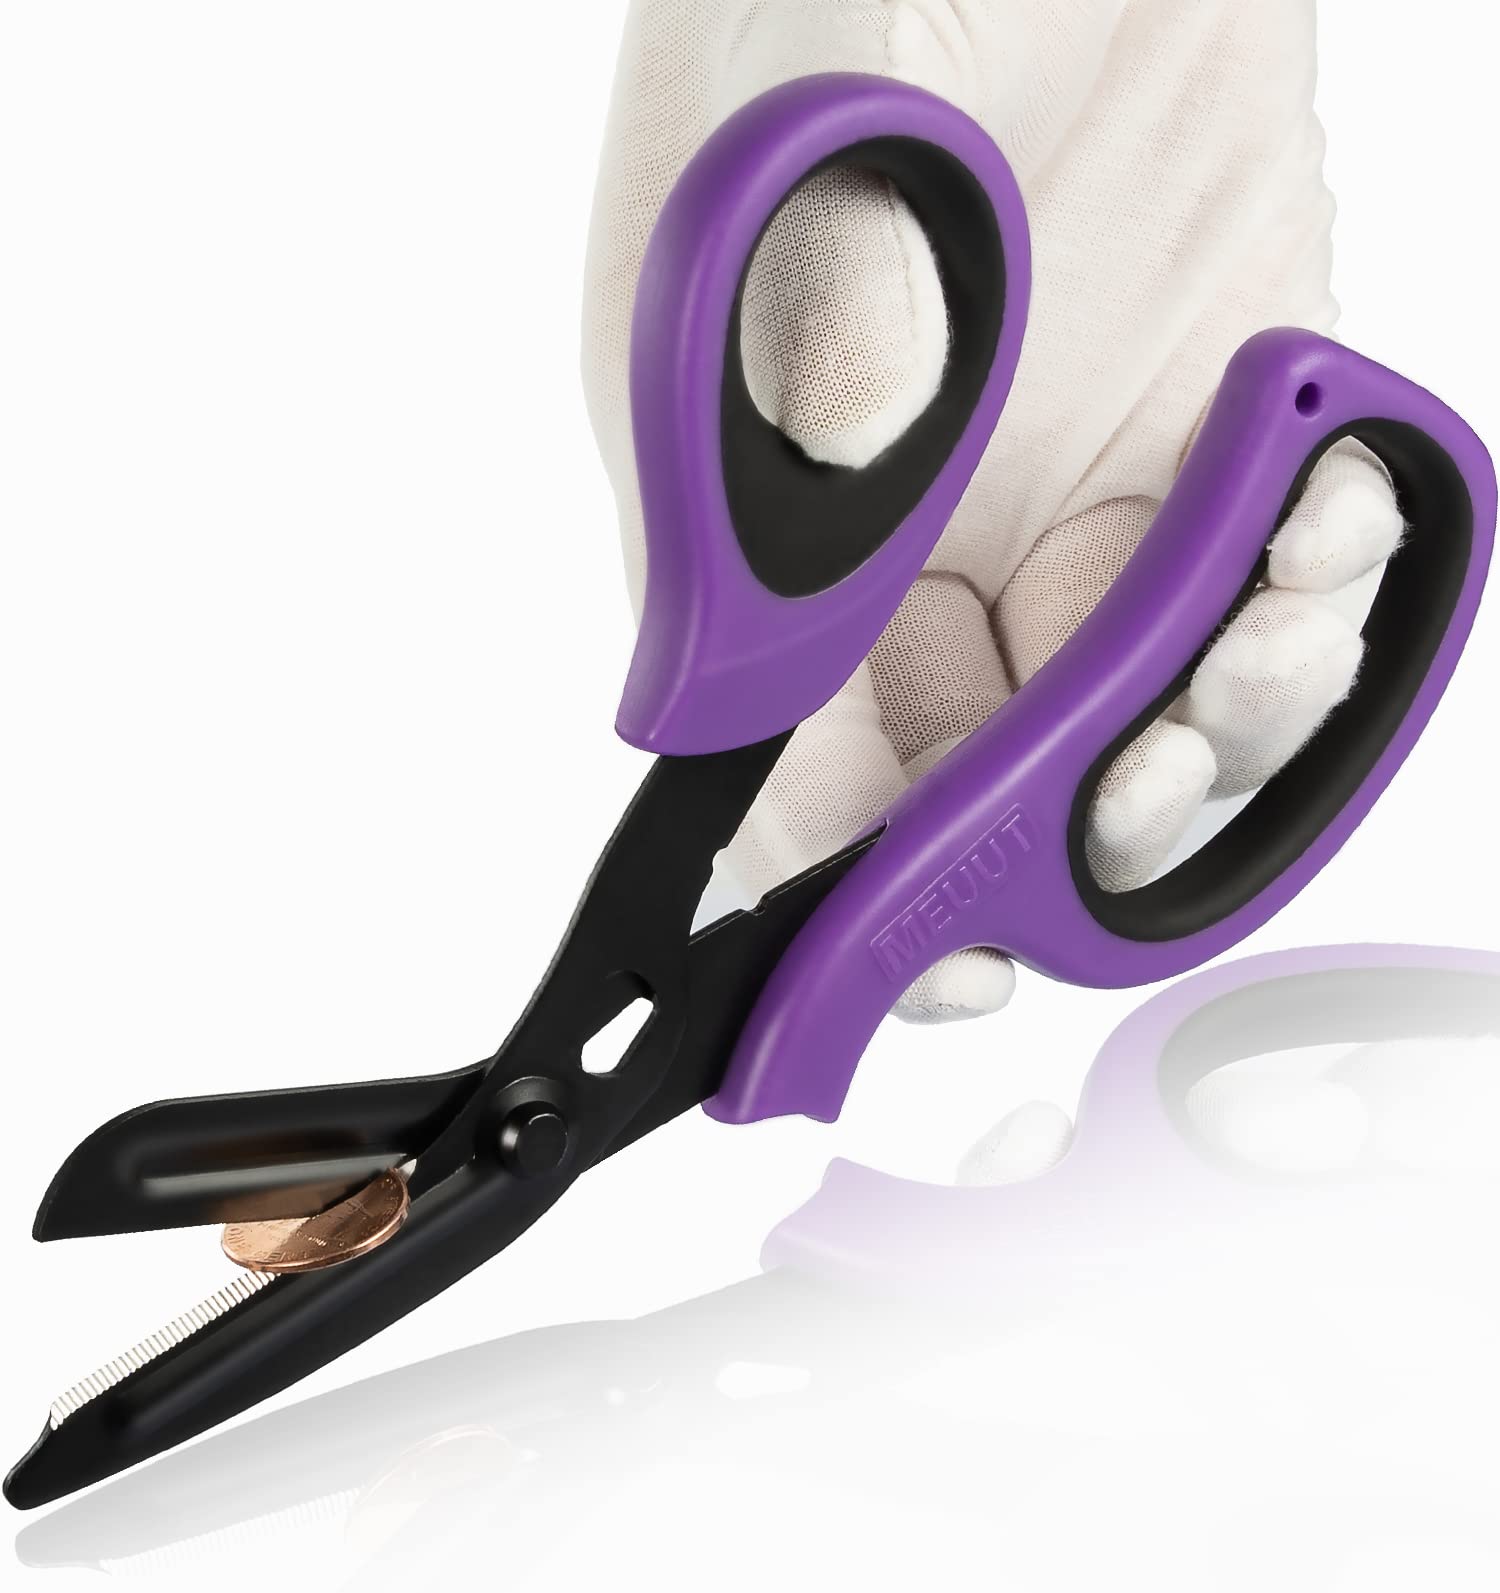 MEUUT Trauma Shears Bandage Scissors -8 inch Heavy Duty Medical Scissors for Nurses Surgical Grade Shears EMT Scissors for EMT W